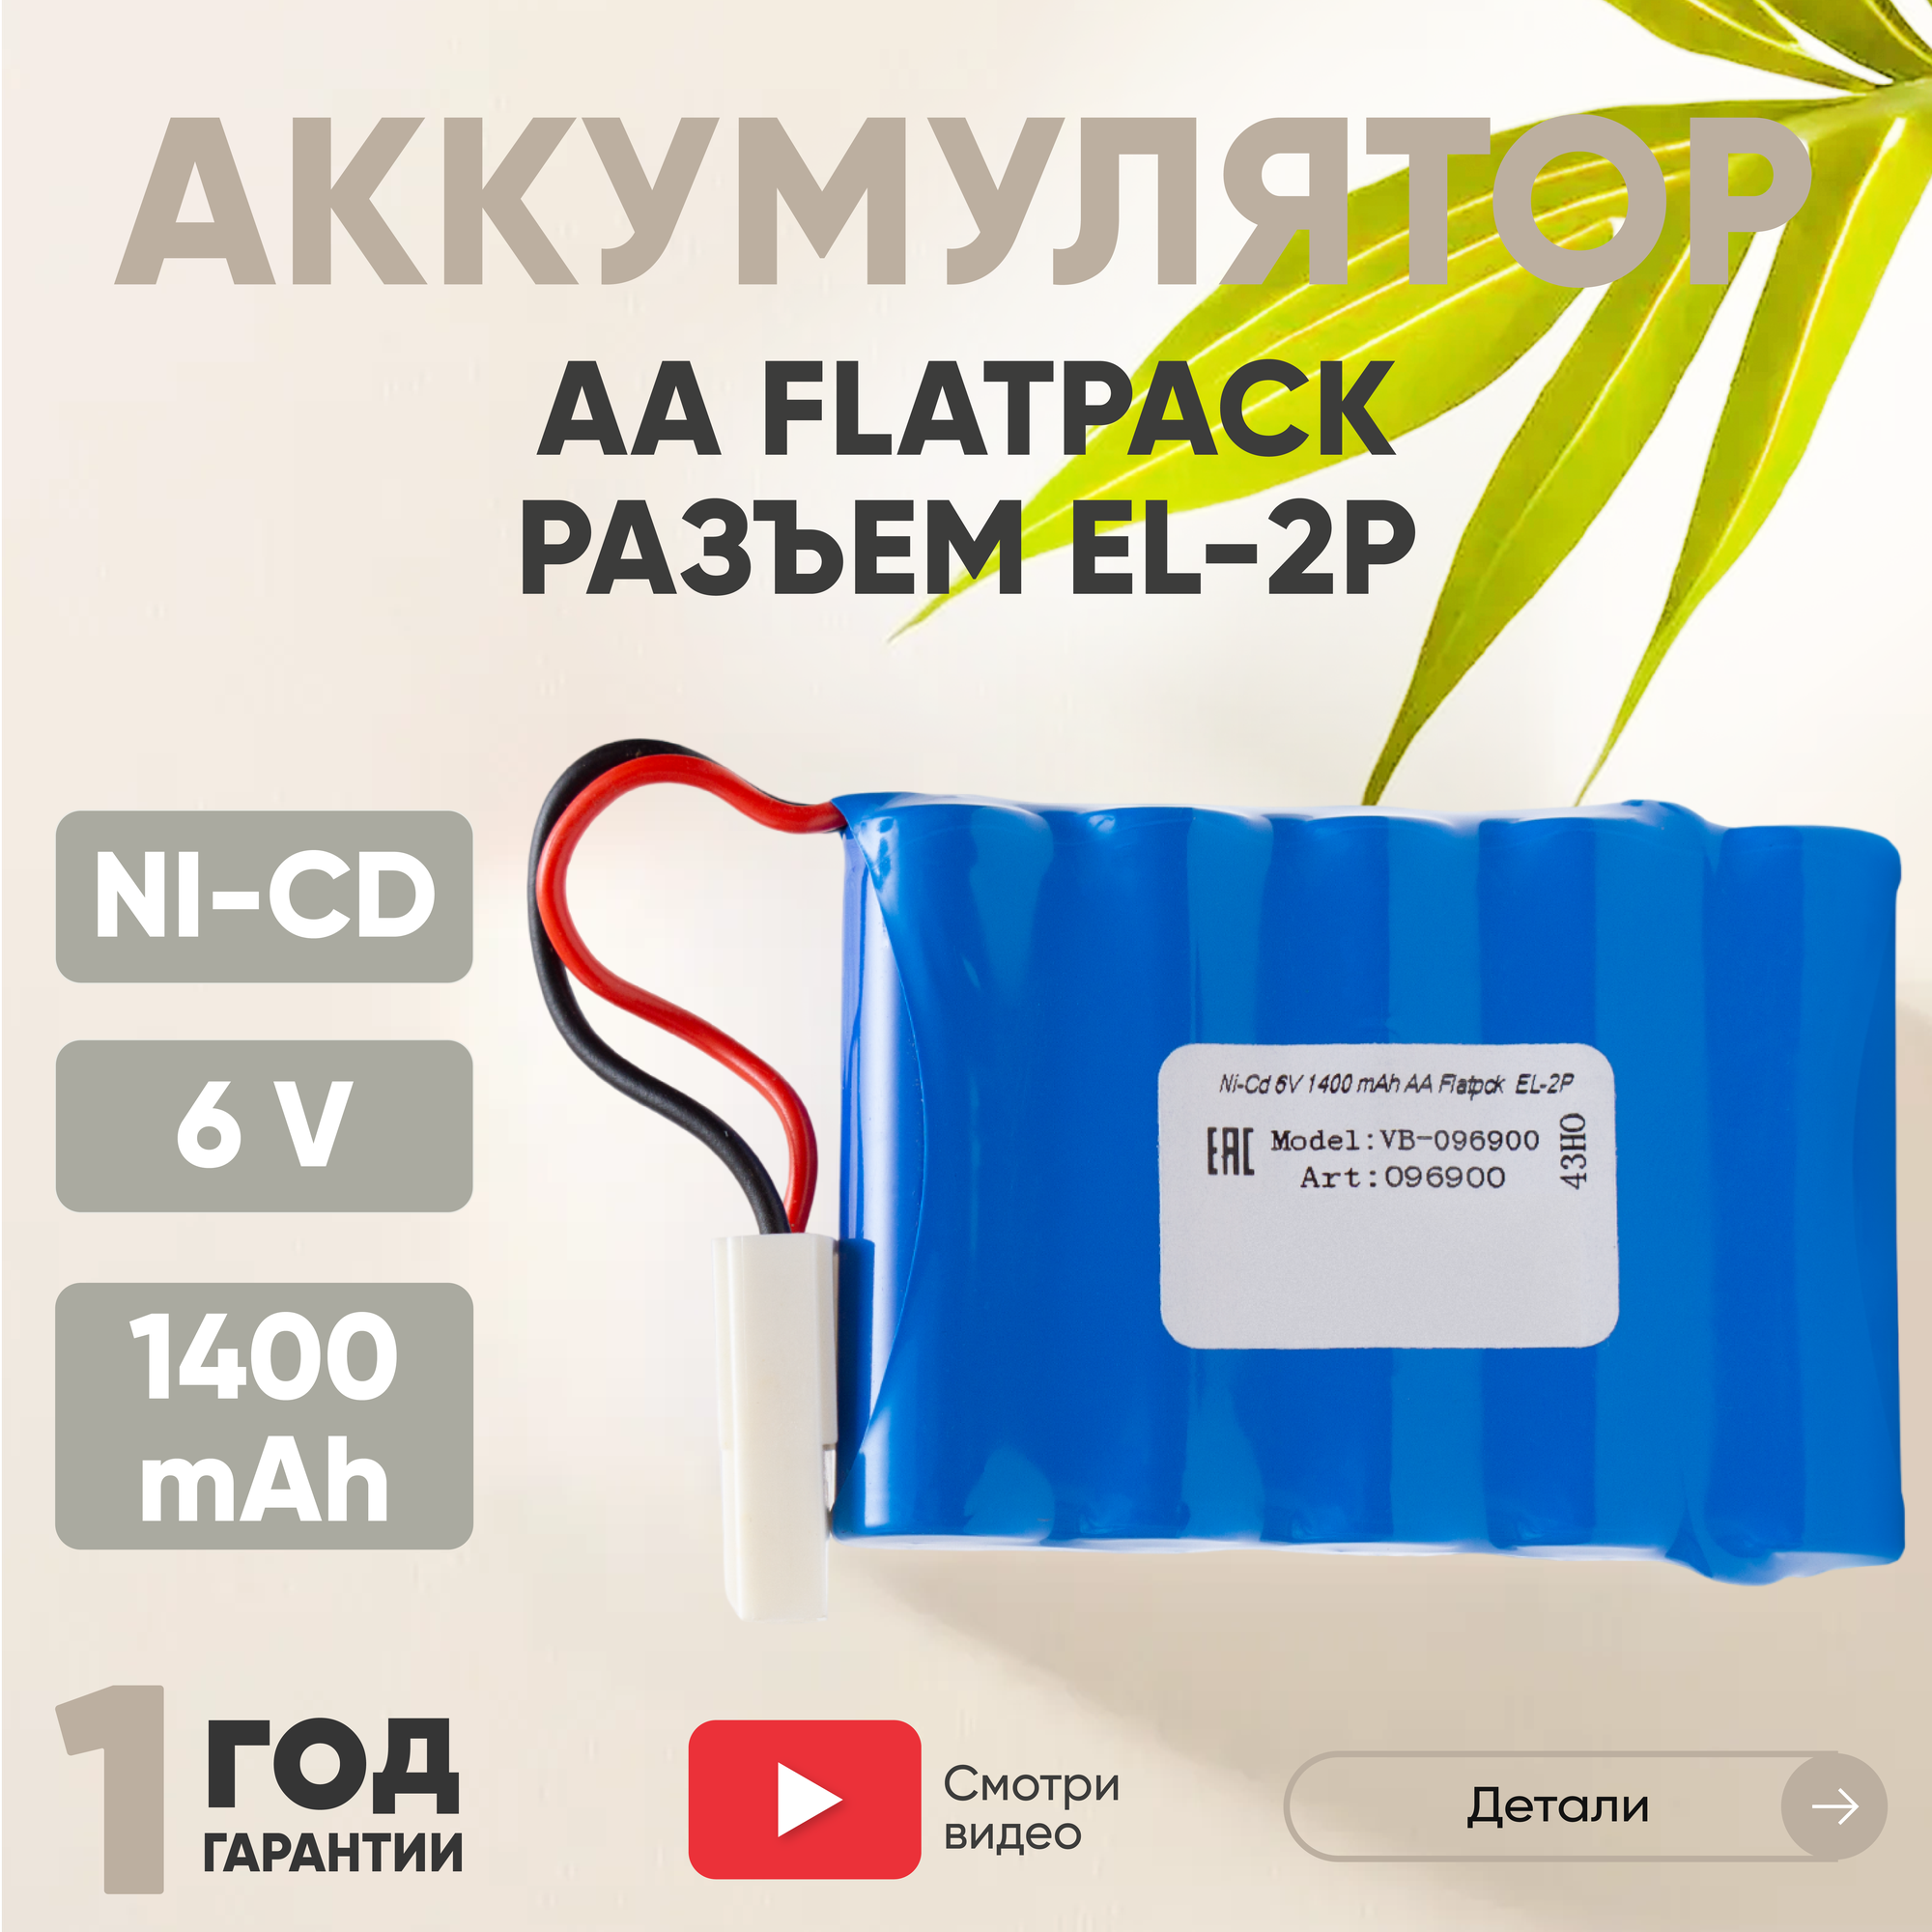 Аккумуляторная батарея (АКБ, аккумулятор) AA Flatpck, разъем EL-2P, 1400мАч, 6В, Ni-Cd